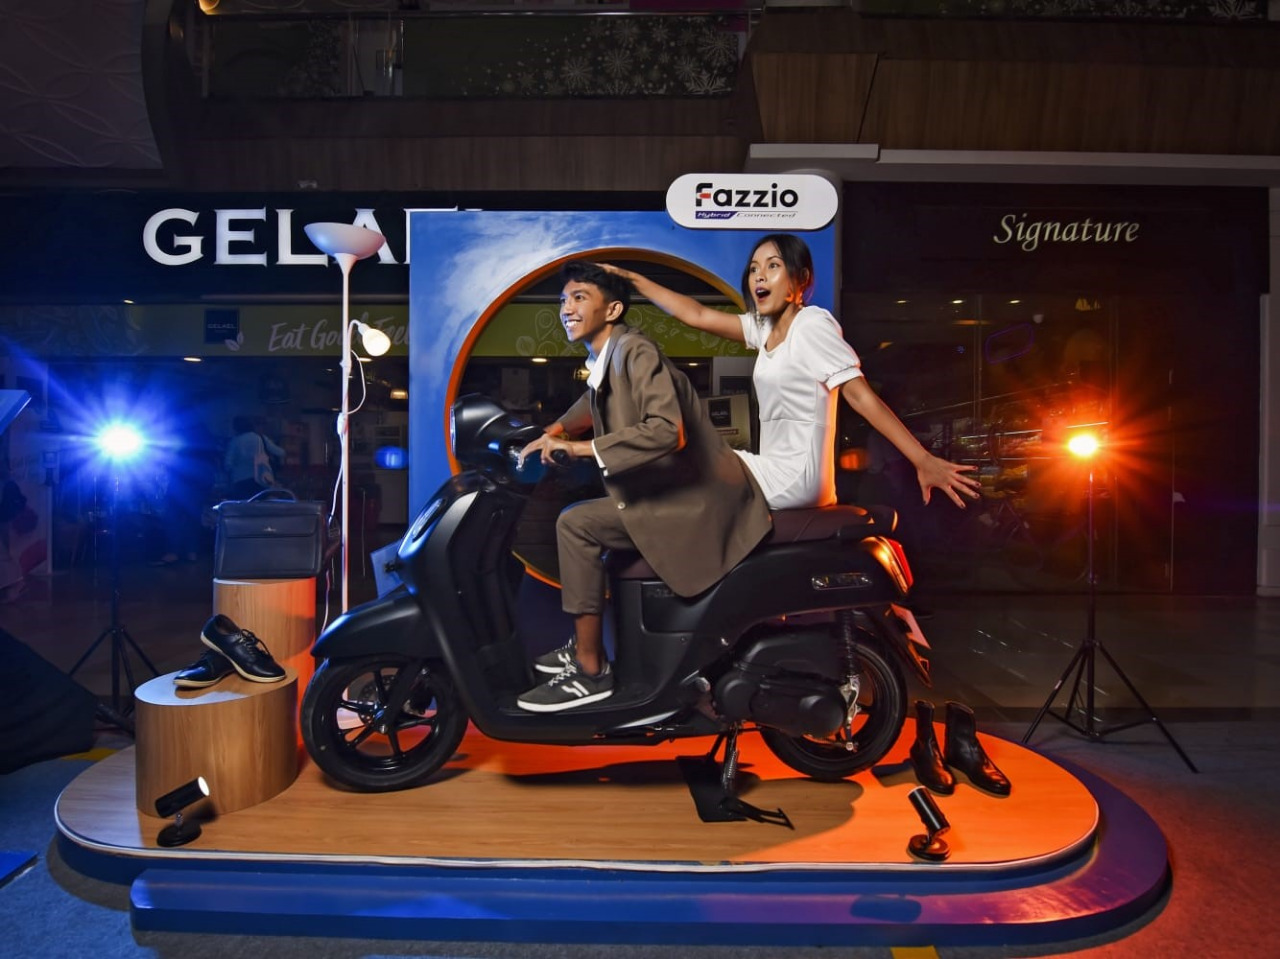 Ungkap Cerita Pemenang Motor Yamaha Fazzio Hybrid-Connected di Fazzio Festival, Siapa Pemenang di Bandung?